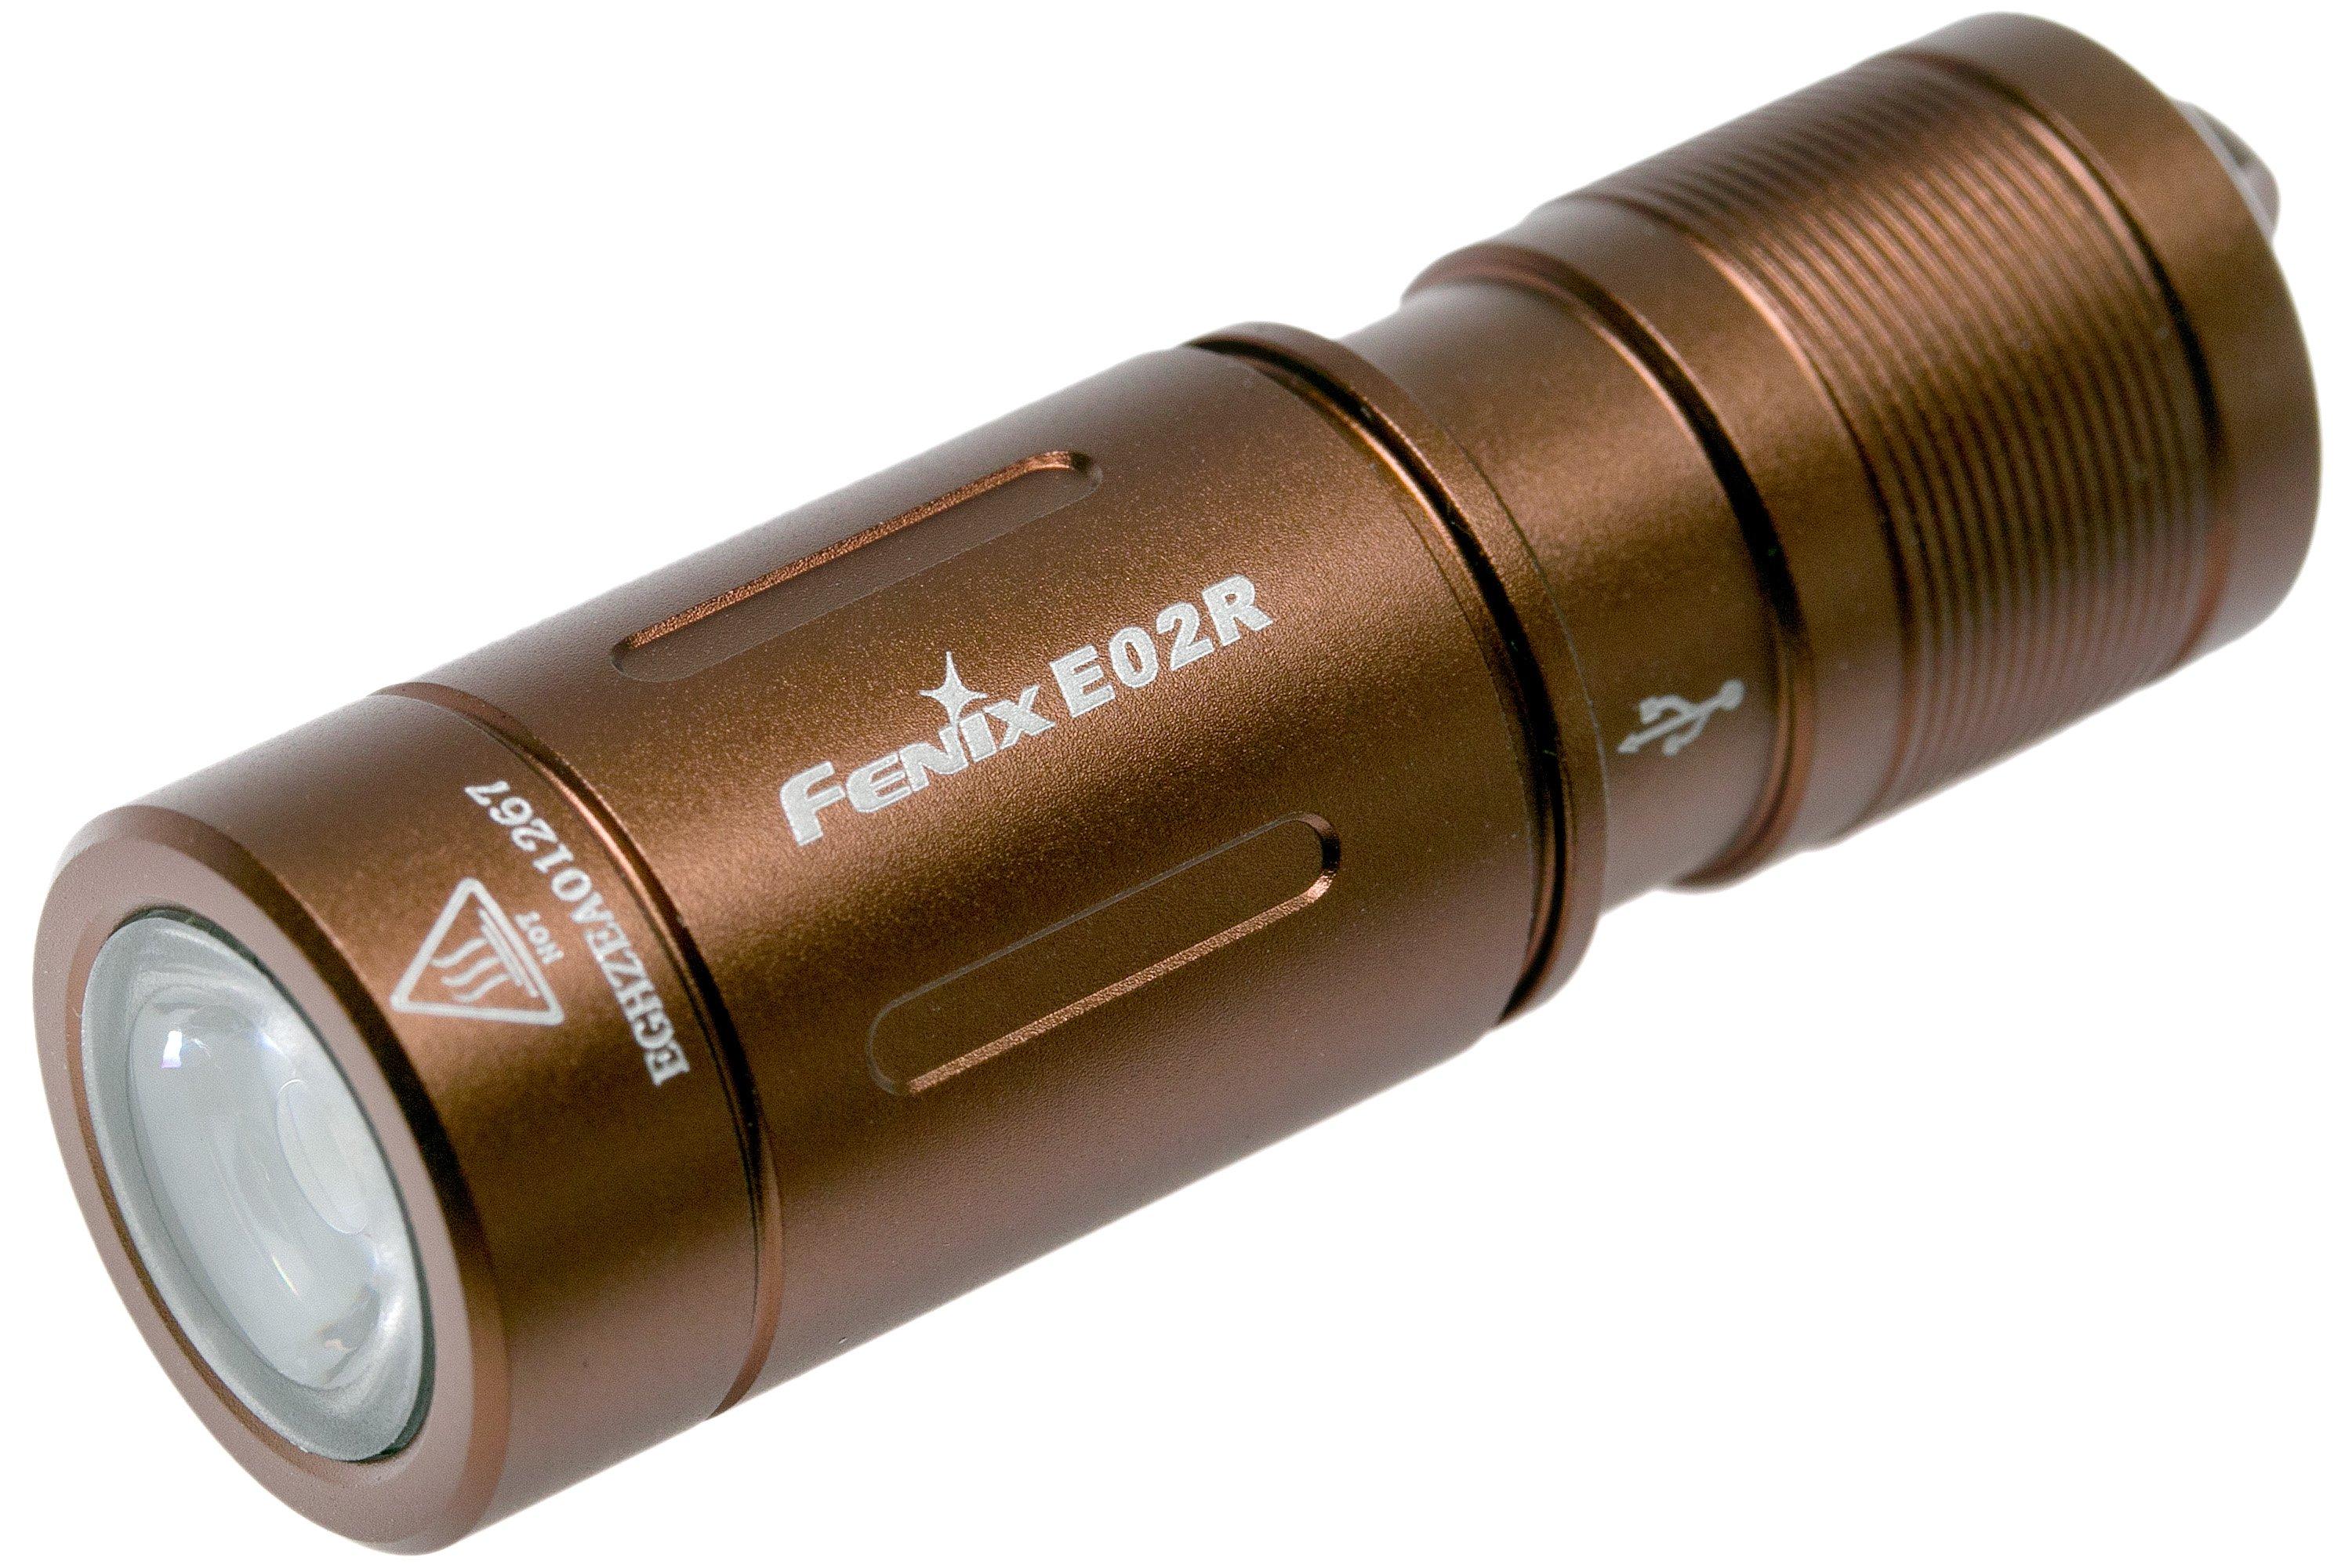 Fenix E02R rechargeable keychain flashlight, 200 lumens, brown .